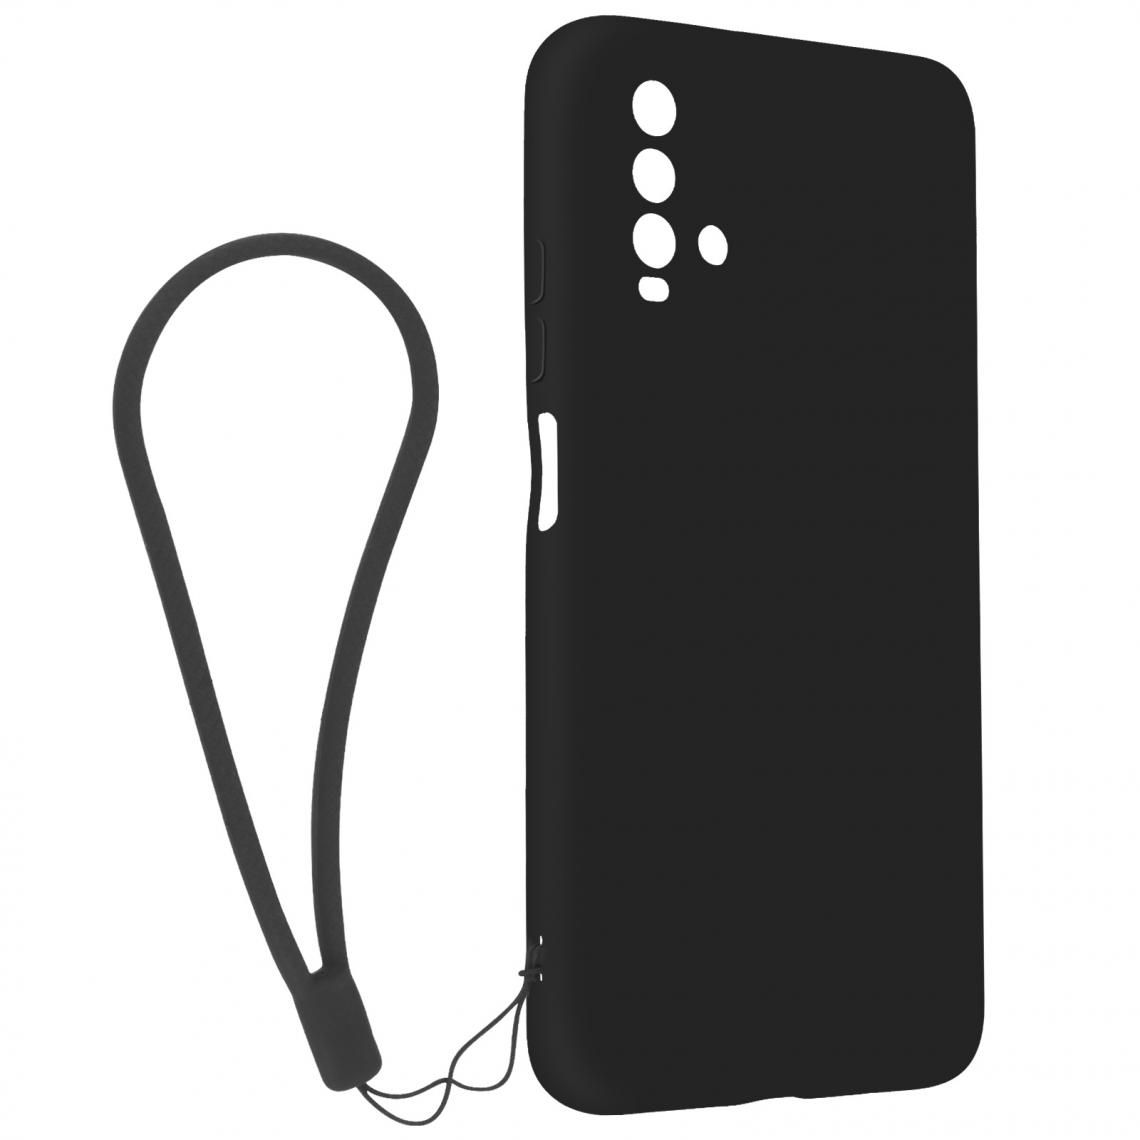 Avizar - Coque Xiaomi Redmi 9T Silicone Gel Semi-rigide avec Dragonne noir - Coque, étui smartphone